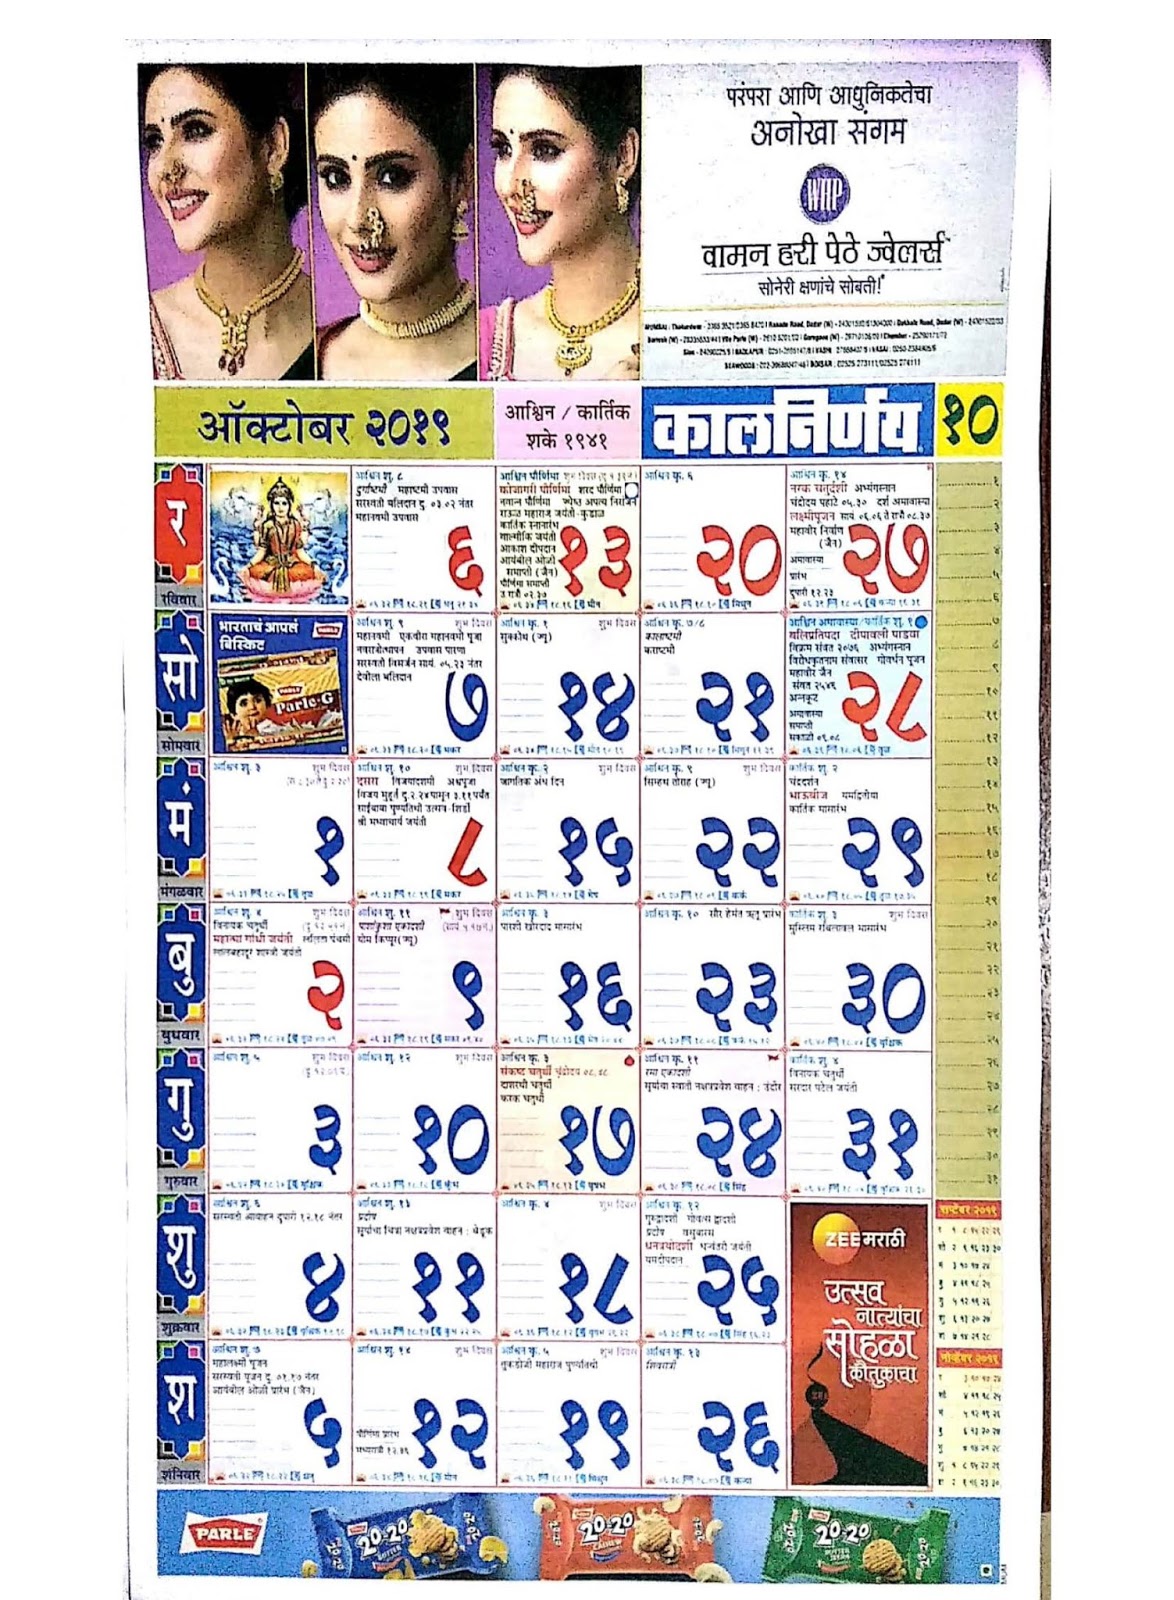 april-2019-marathi-calendar-2019-calendar-calendar-printable